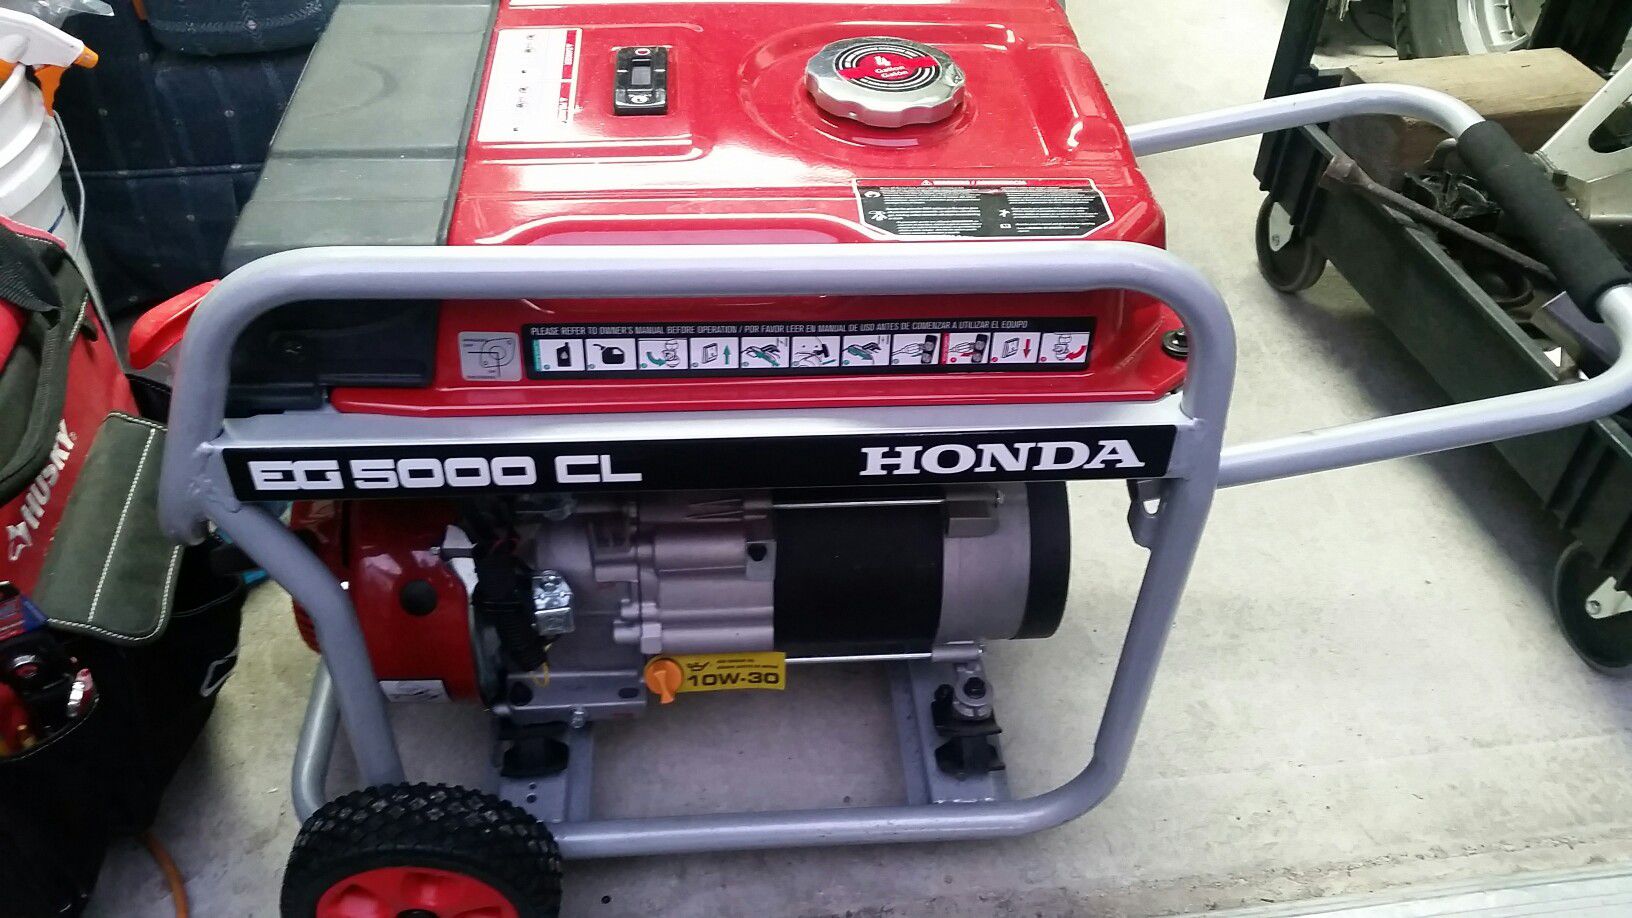 Honda EG 5000 CL generator